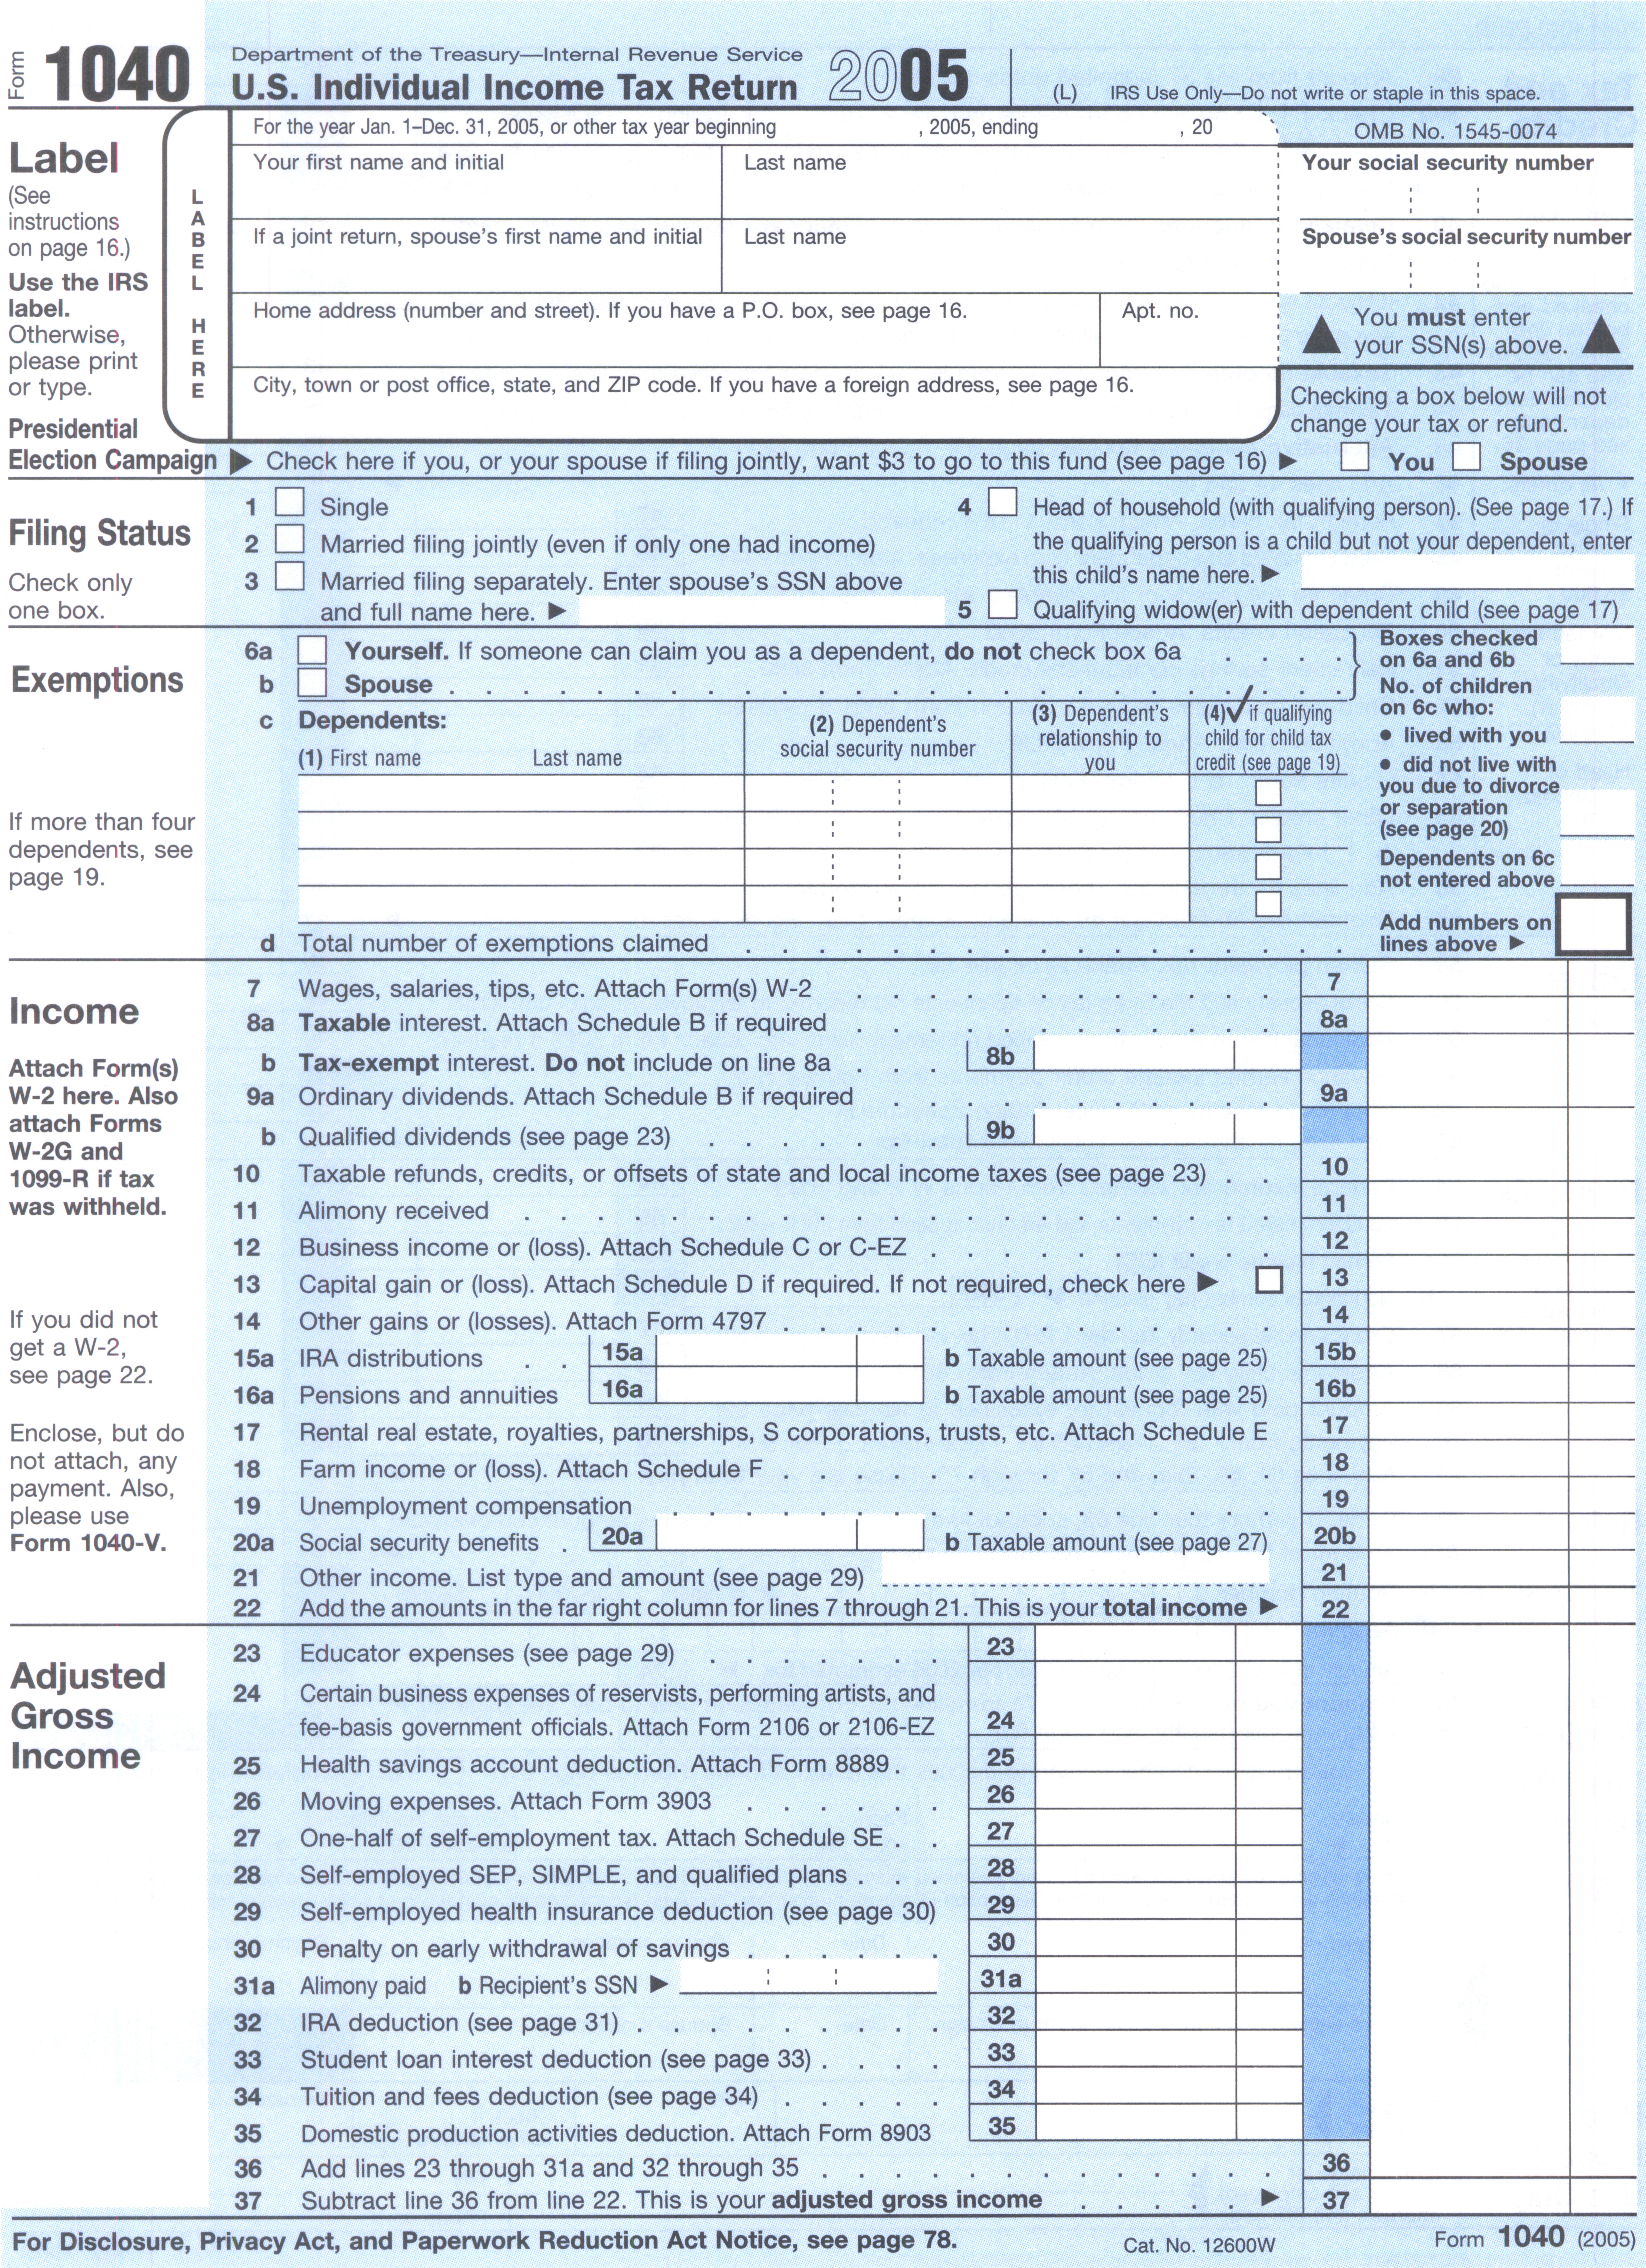 Tax form or tax document